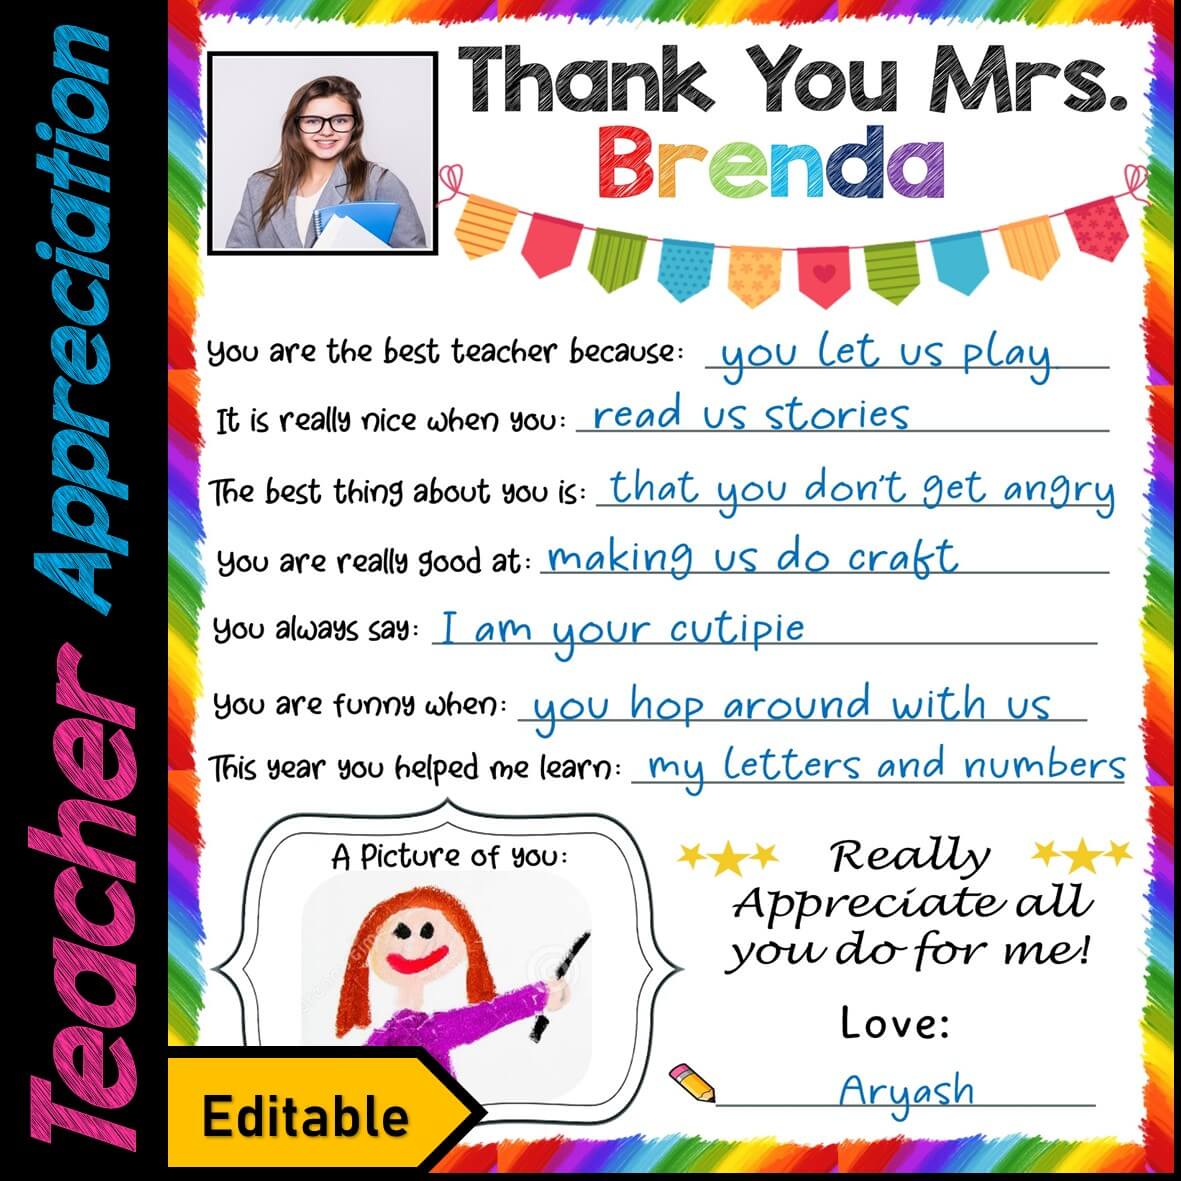 Teacher Appreciation Week Editable Template, Staff appreciation week #2